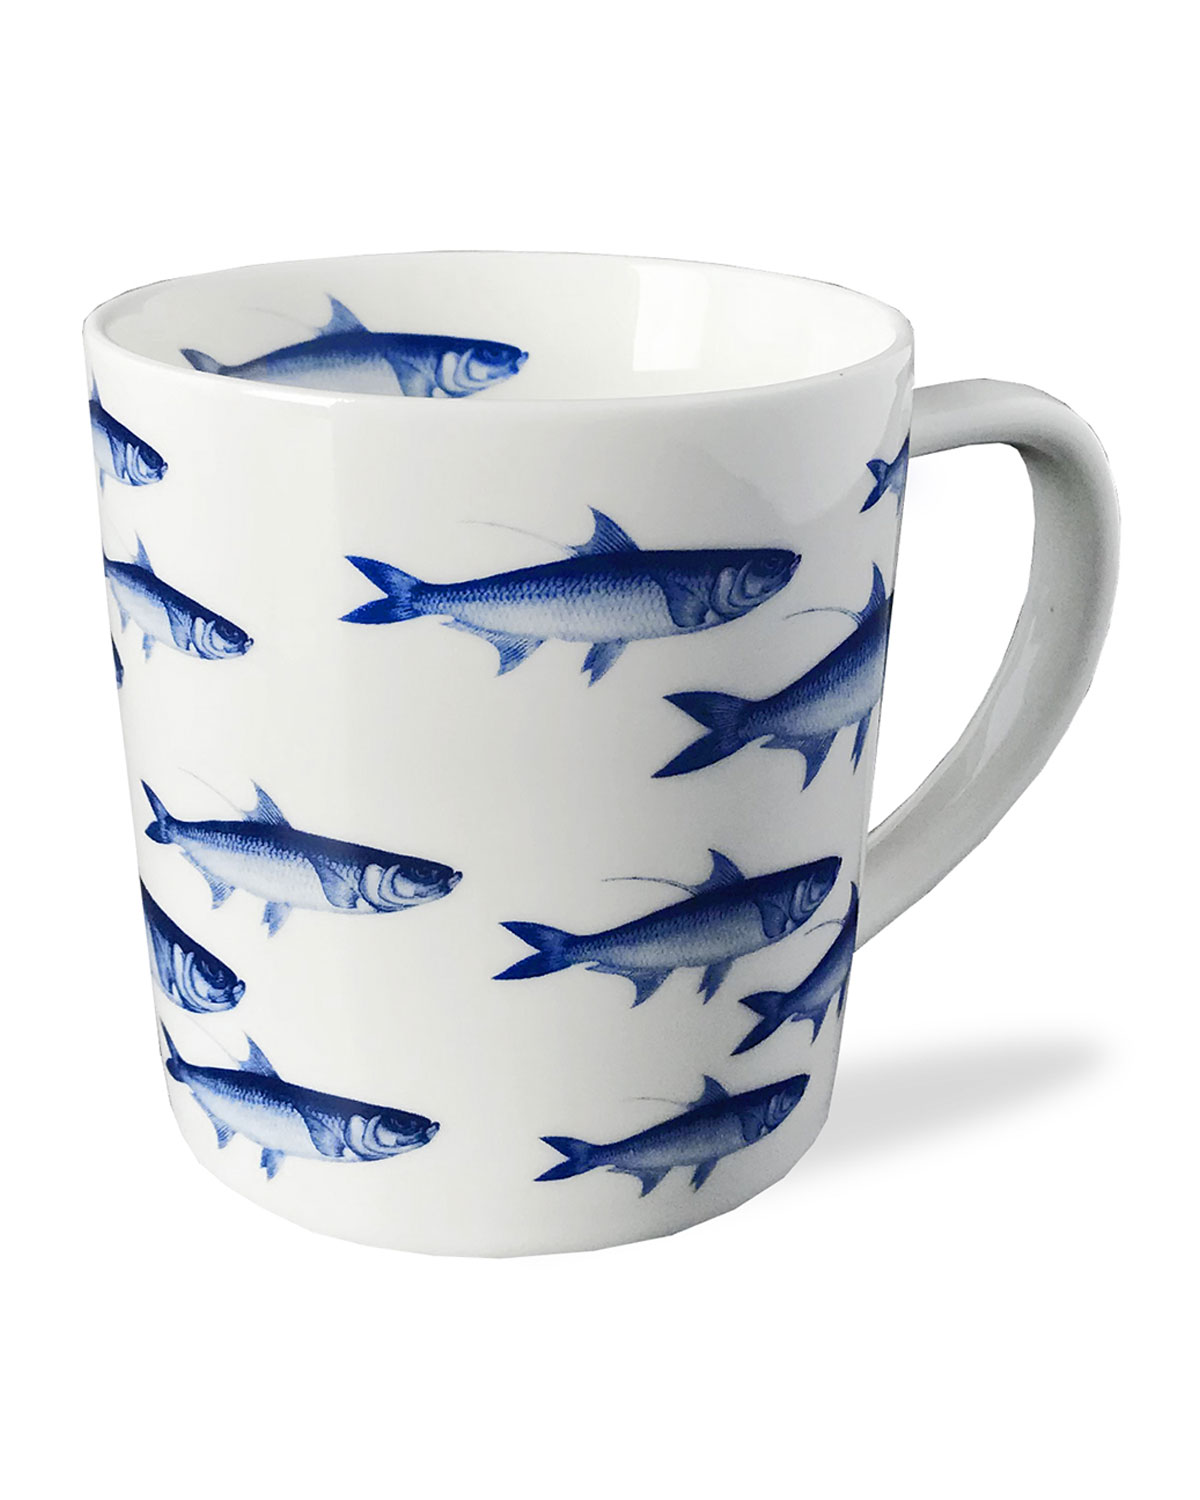 Caskata School Of Fish Blue Wide Mugs, Set Of 4